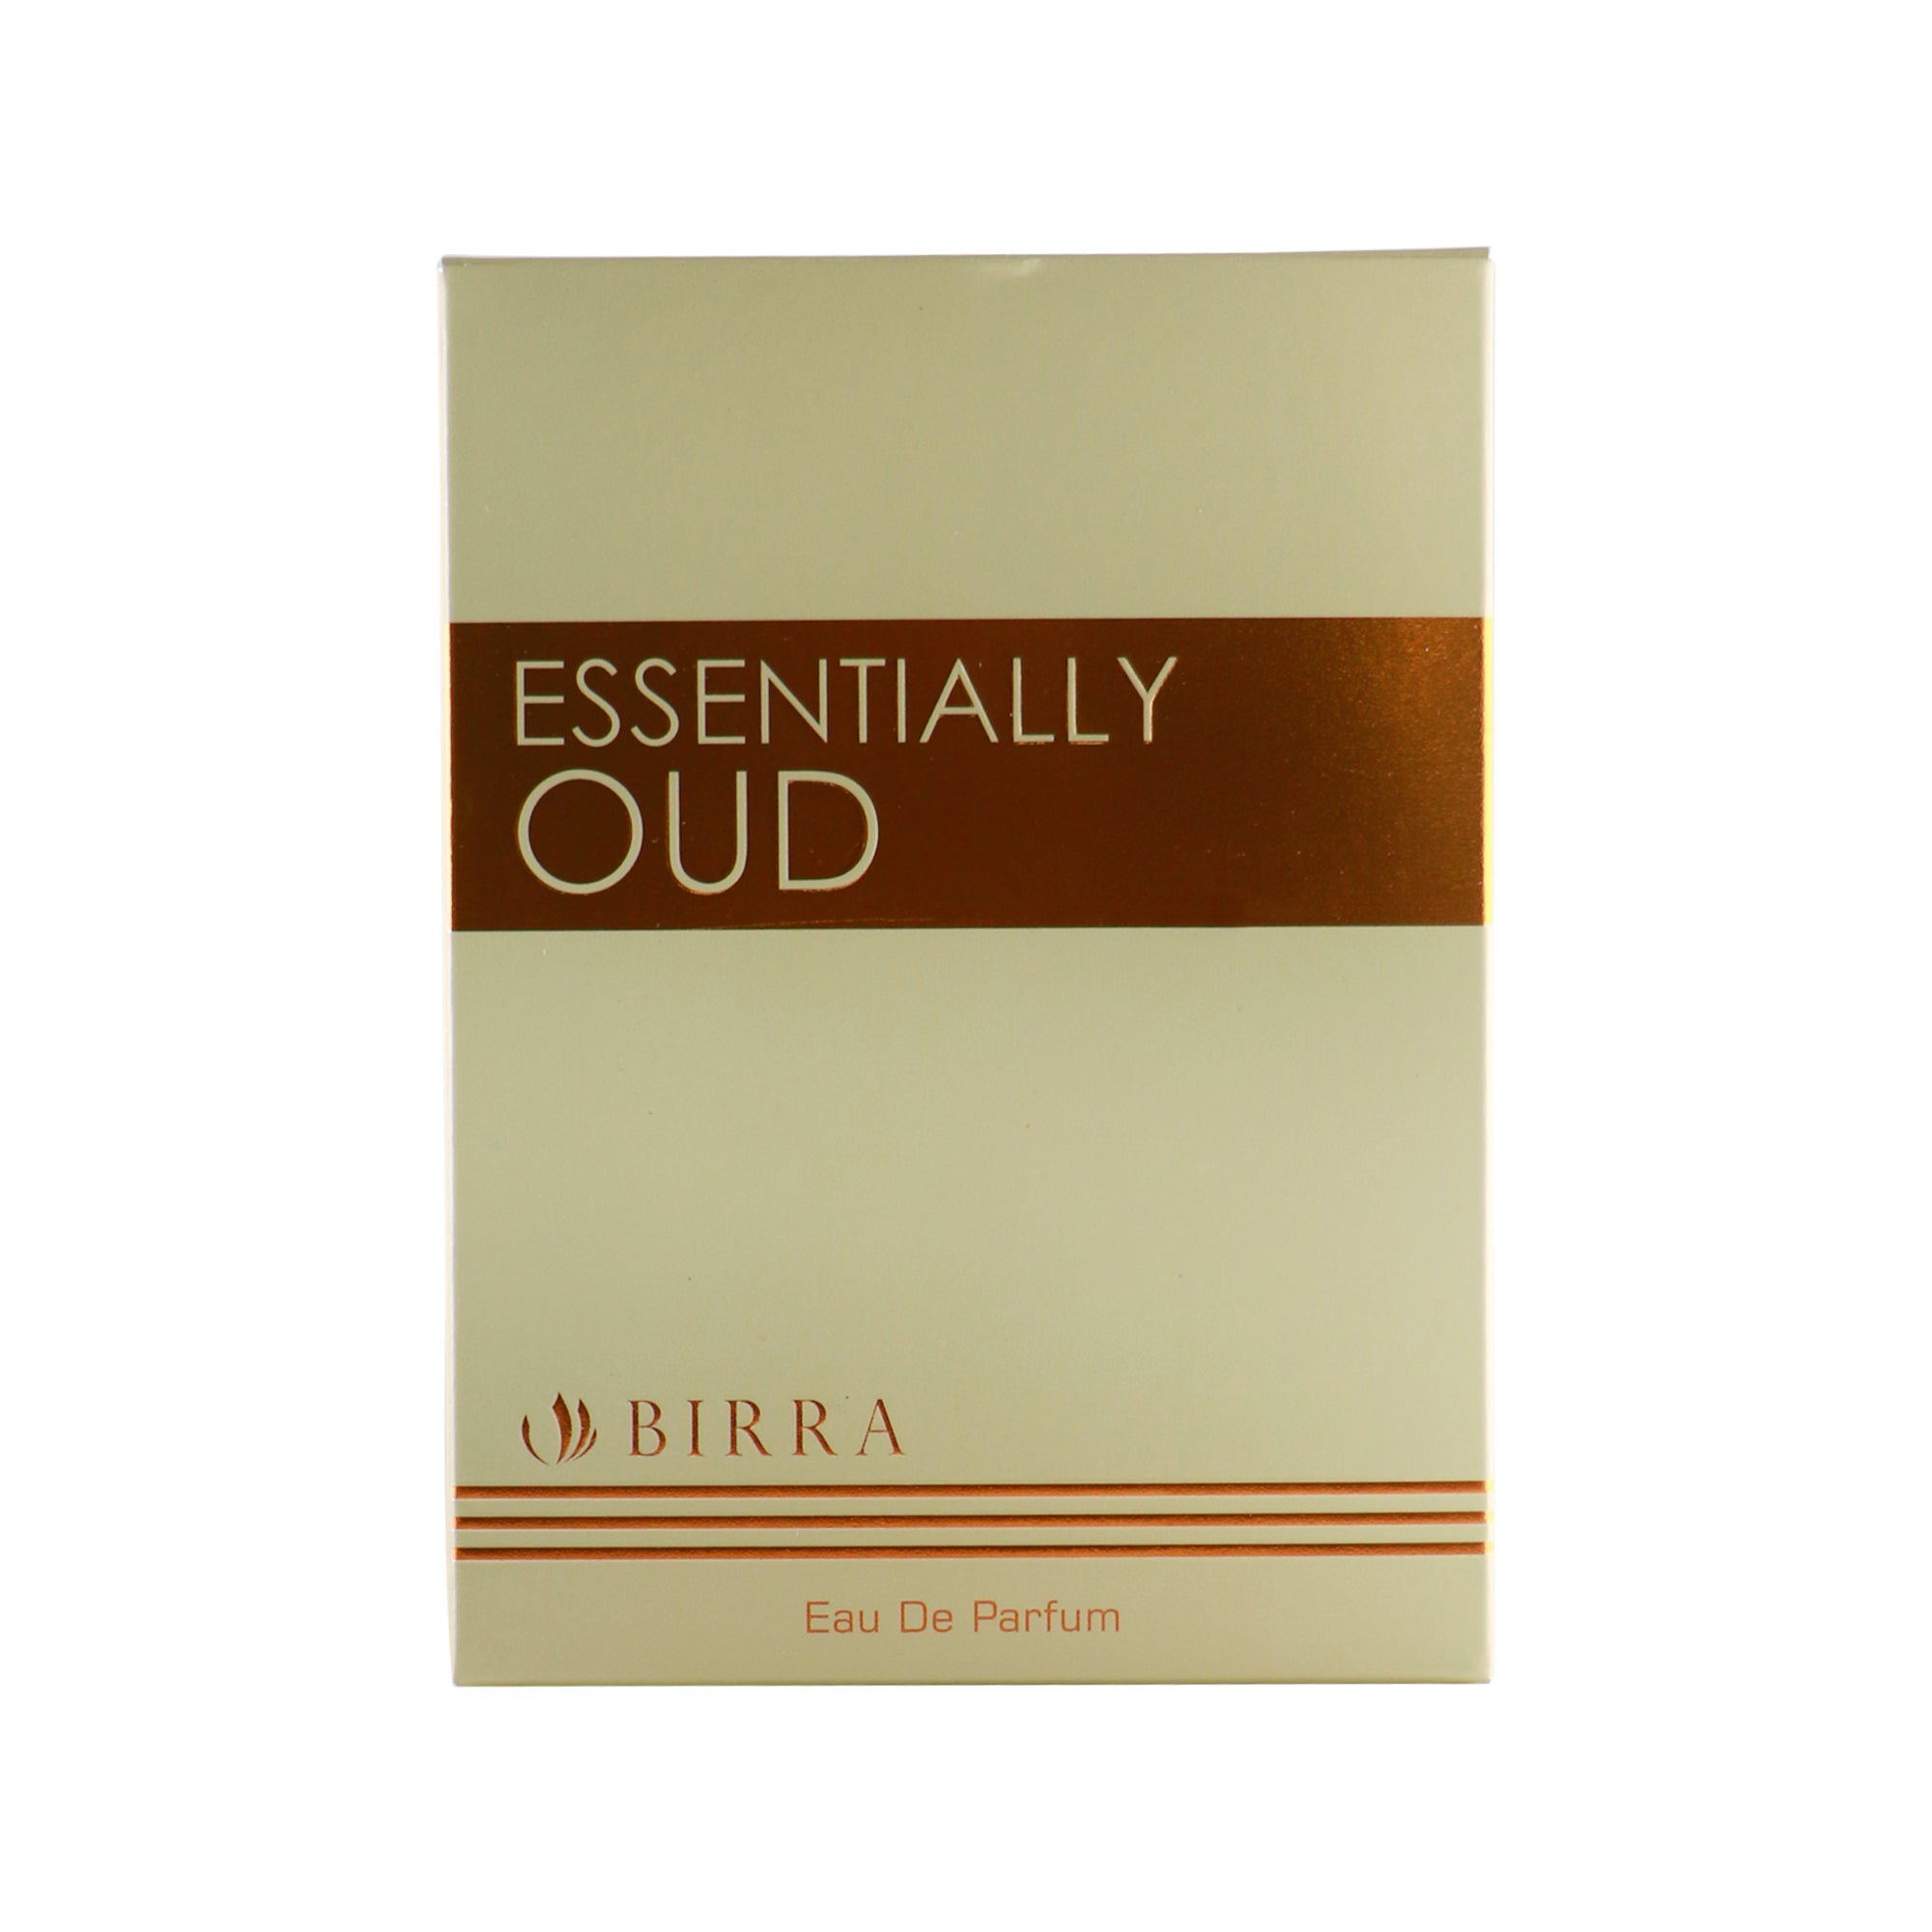 Essentially Oud EDP 50ml- Premium Perfume